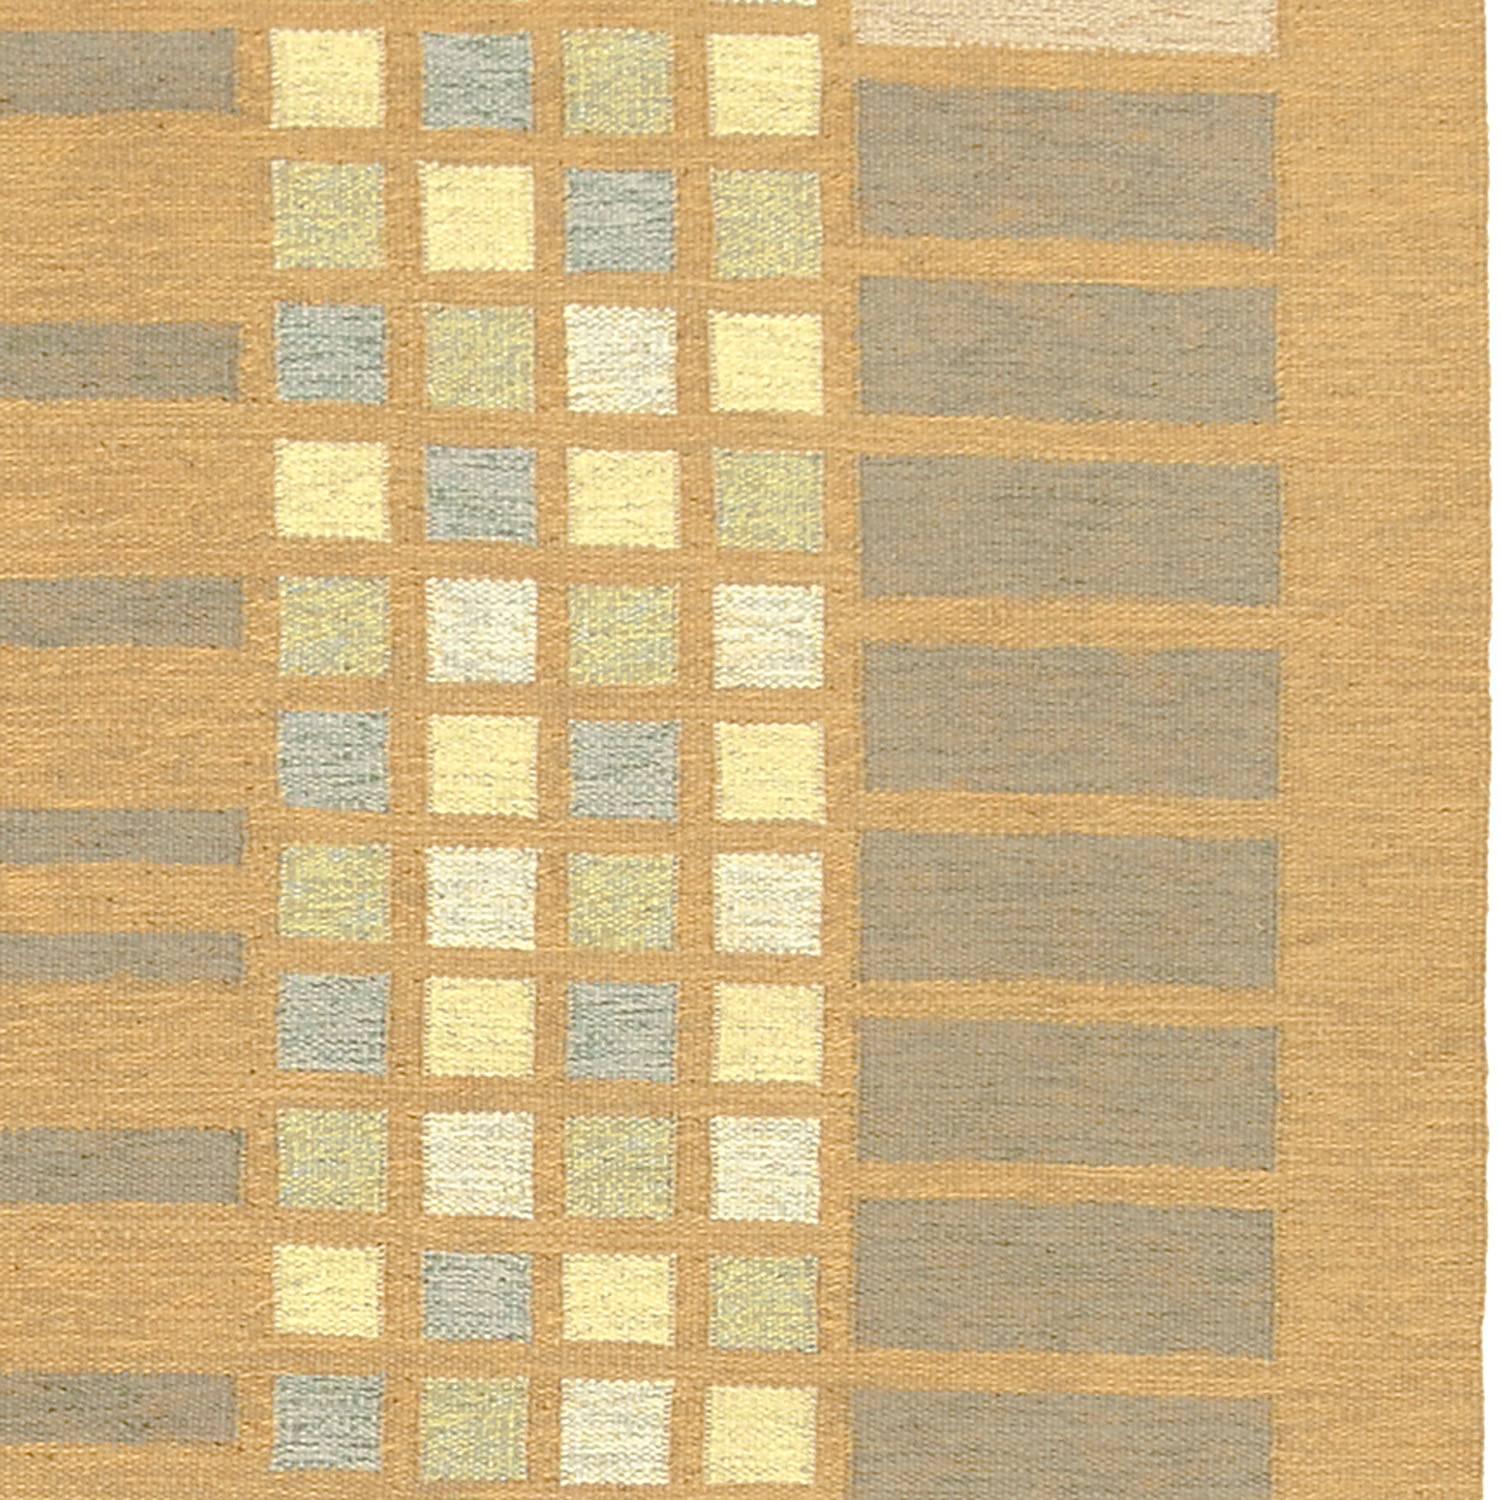 Scandinavian Modern Mid-20th Century Swedish Flat-Weave Carpet For Sale